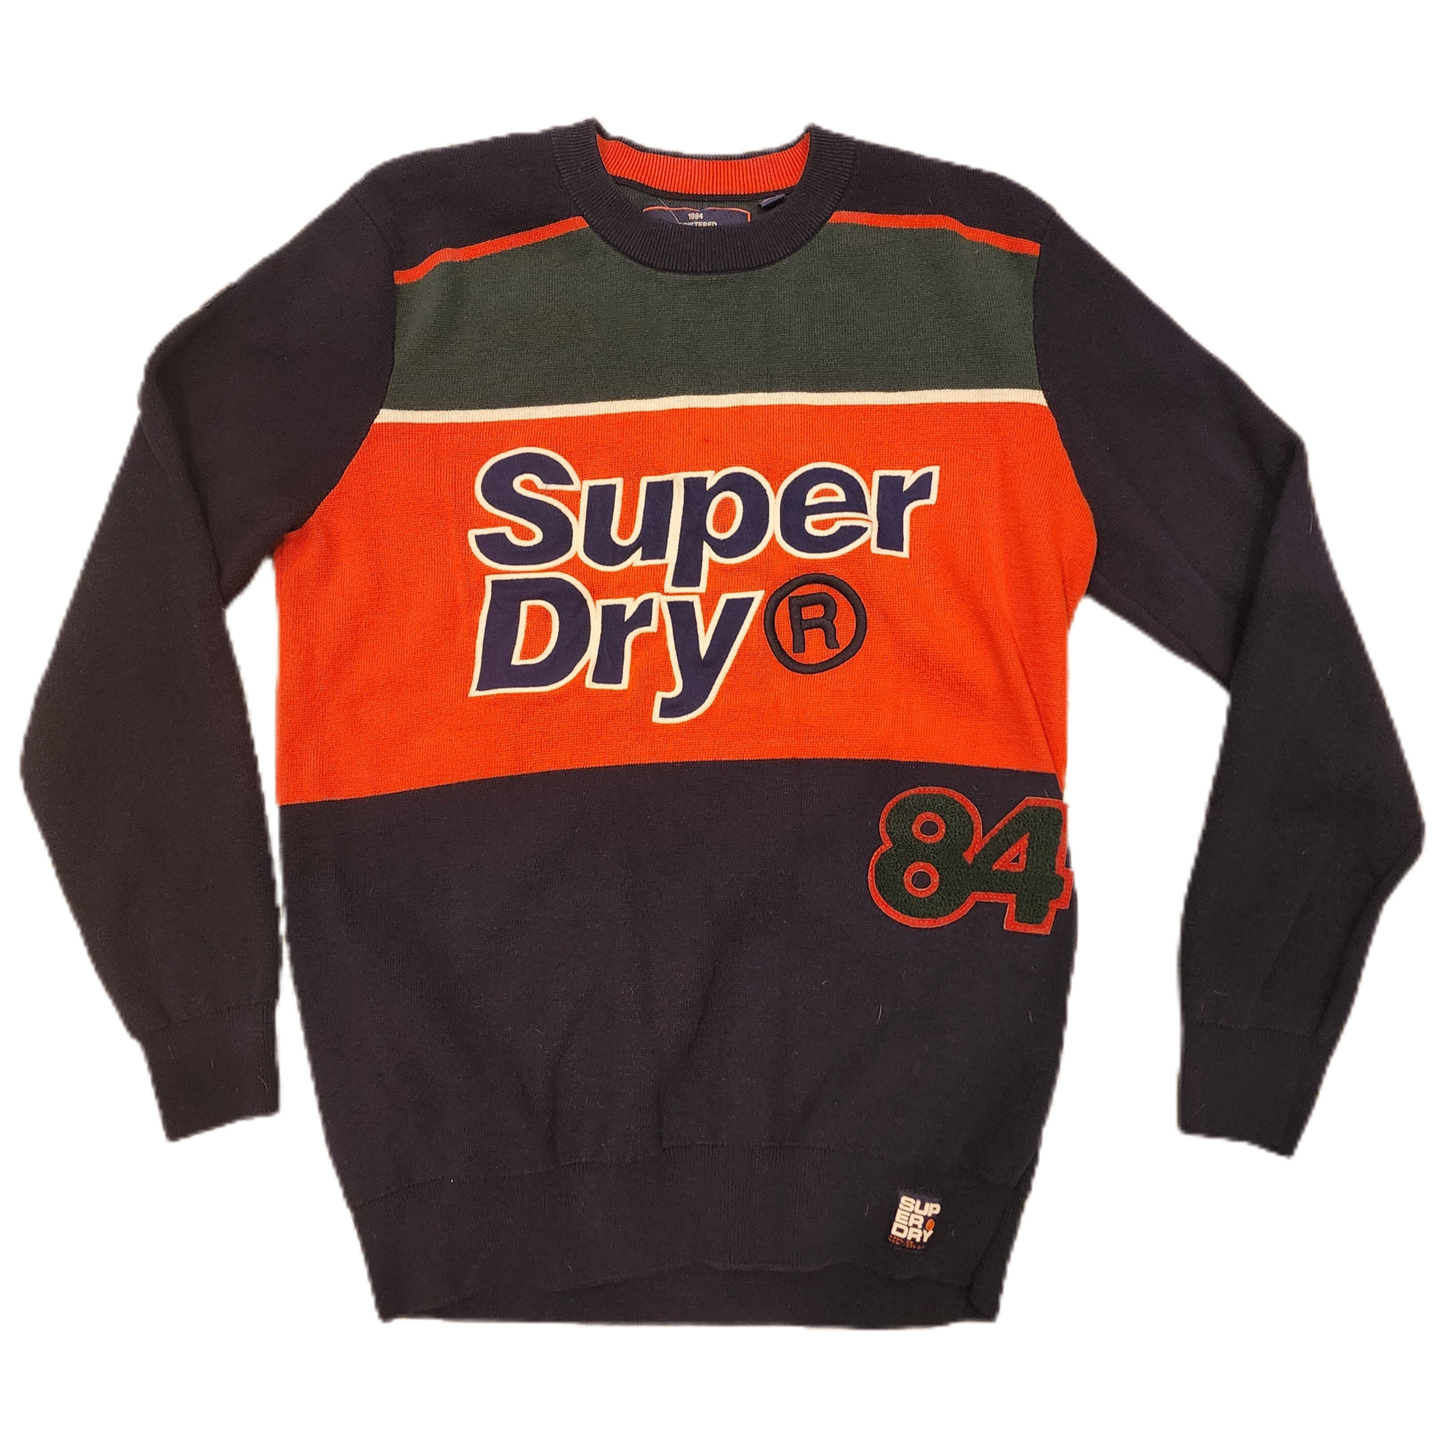 Super Dry - "Logo Sweater" - Size XL